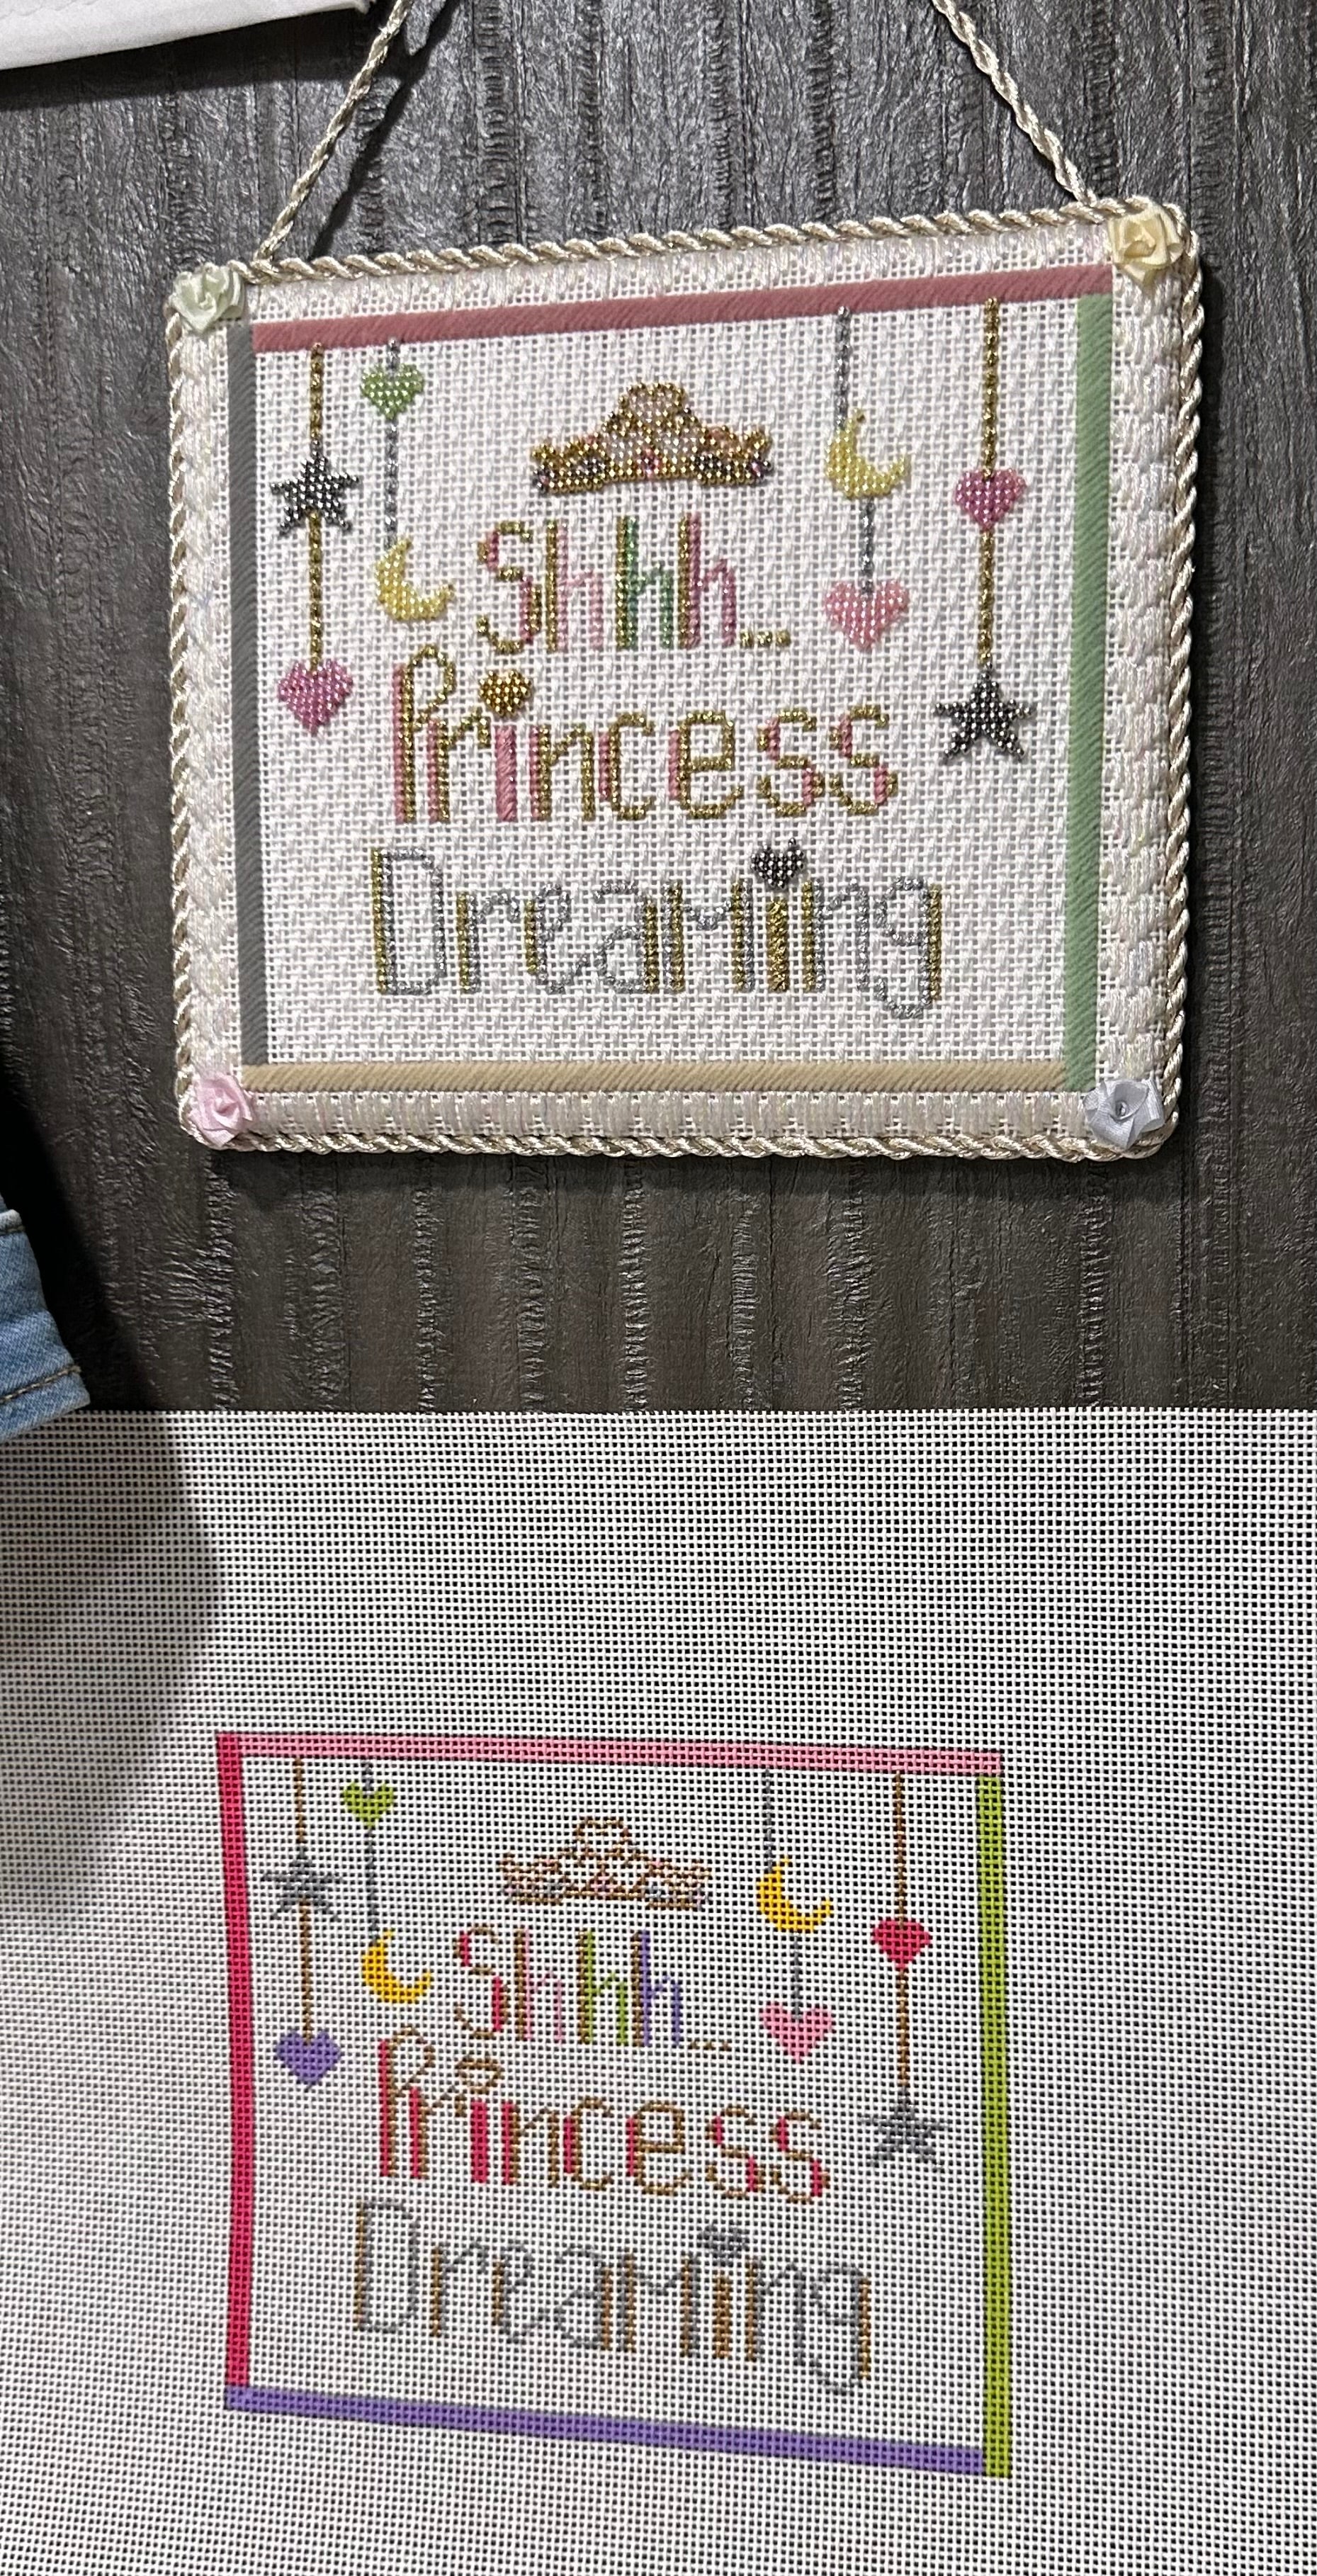 Sew Much Fun! Princess Dreaming and Stitch Guide